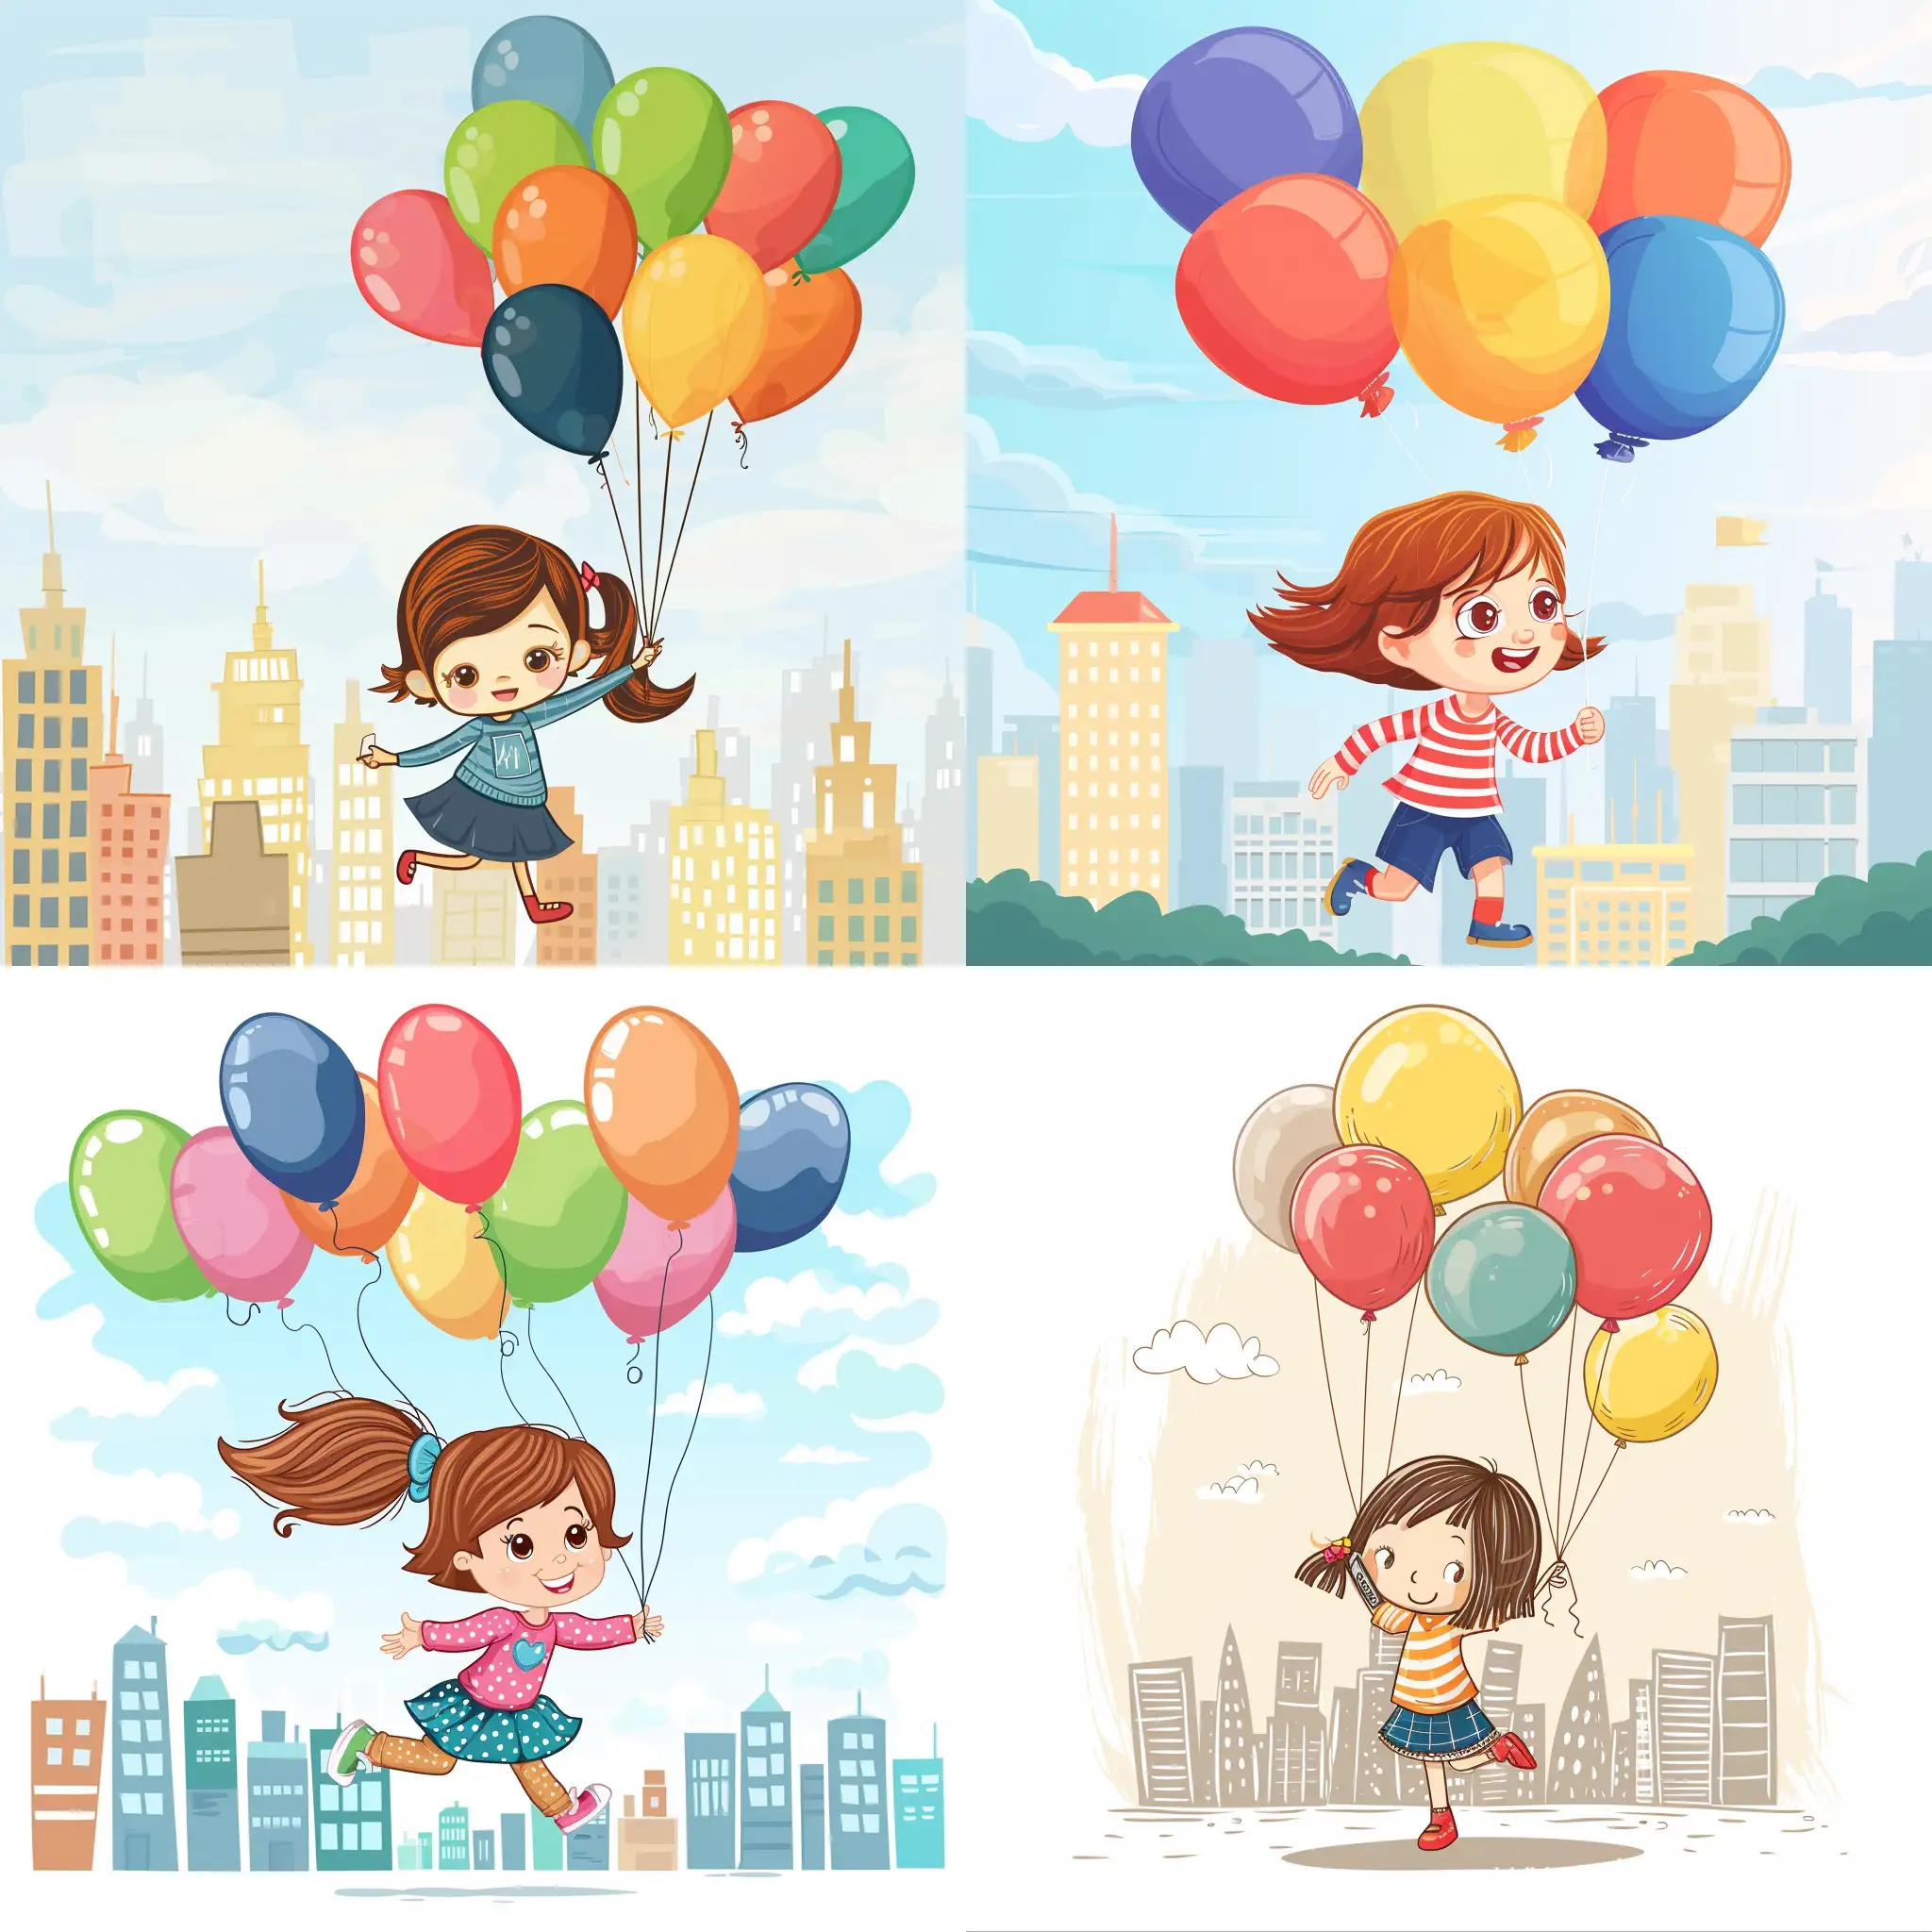 Joyful-Cartoon-Girl-with-Balloons-Roaming-the-City